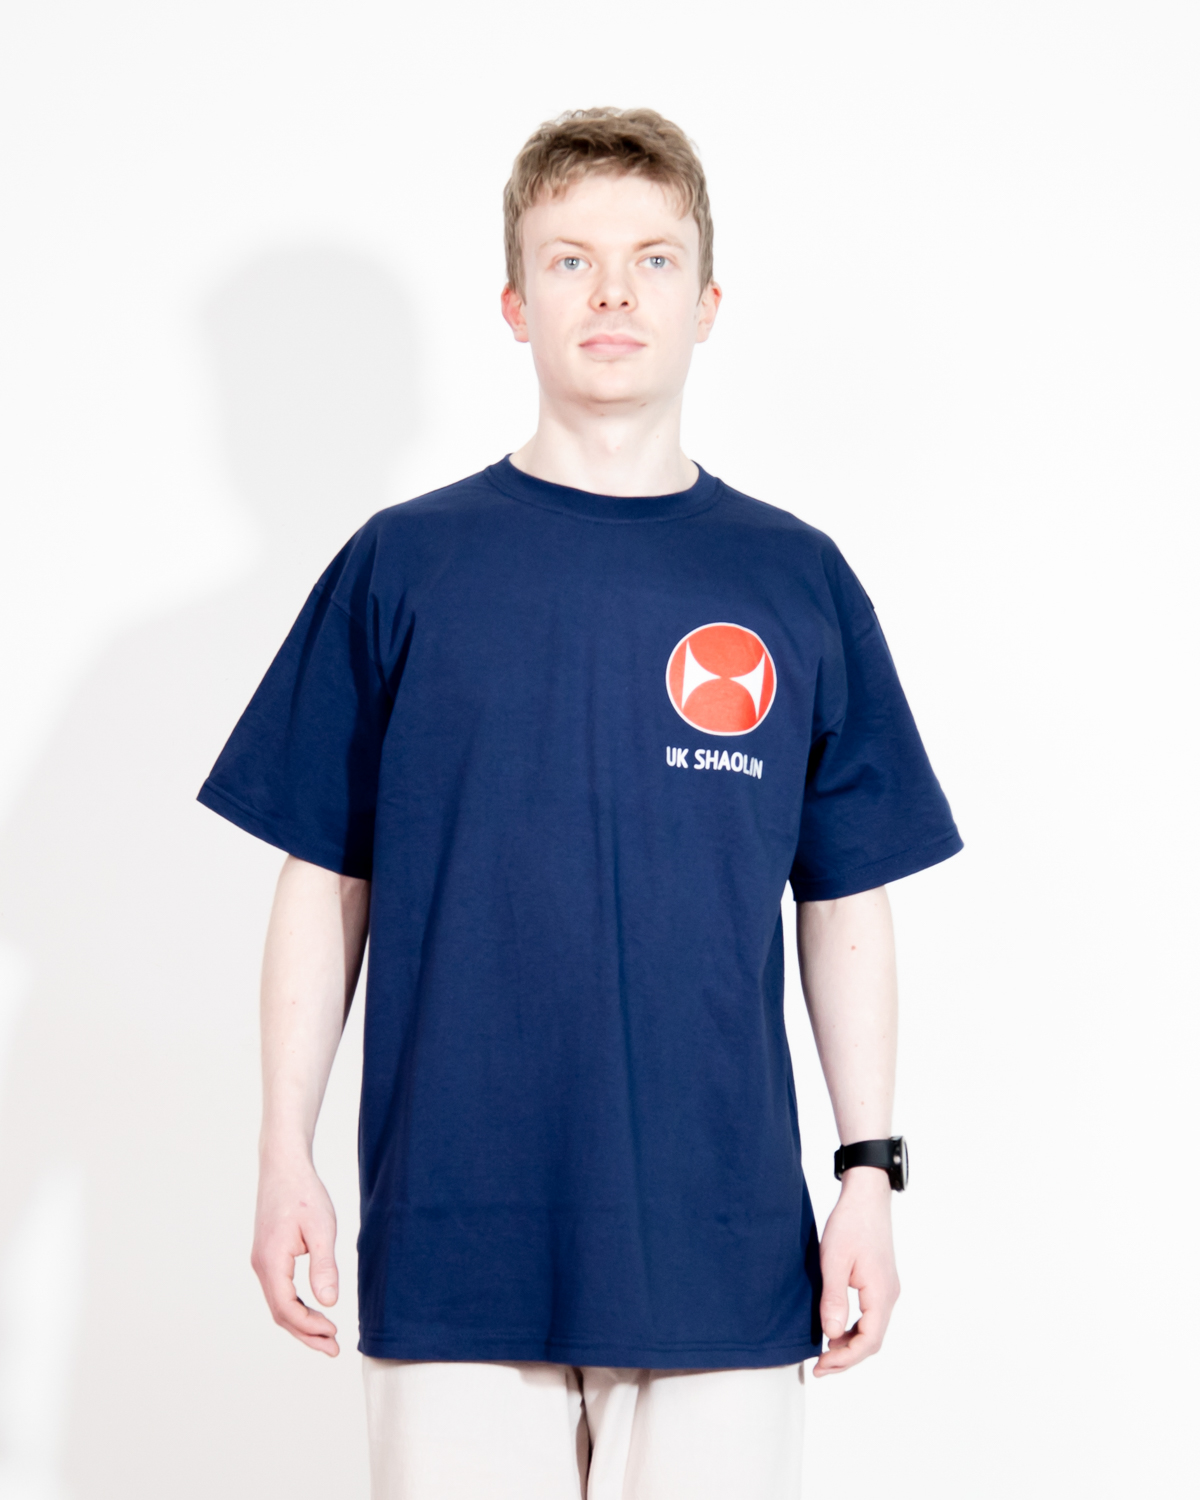 UK Shaolin T-Shirt